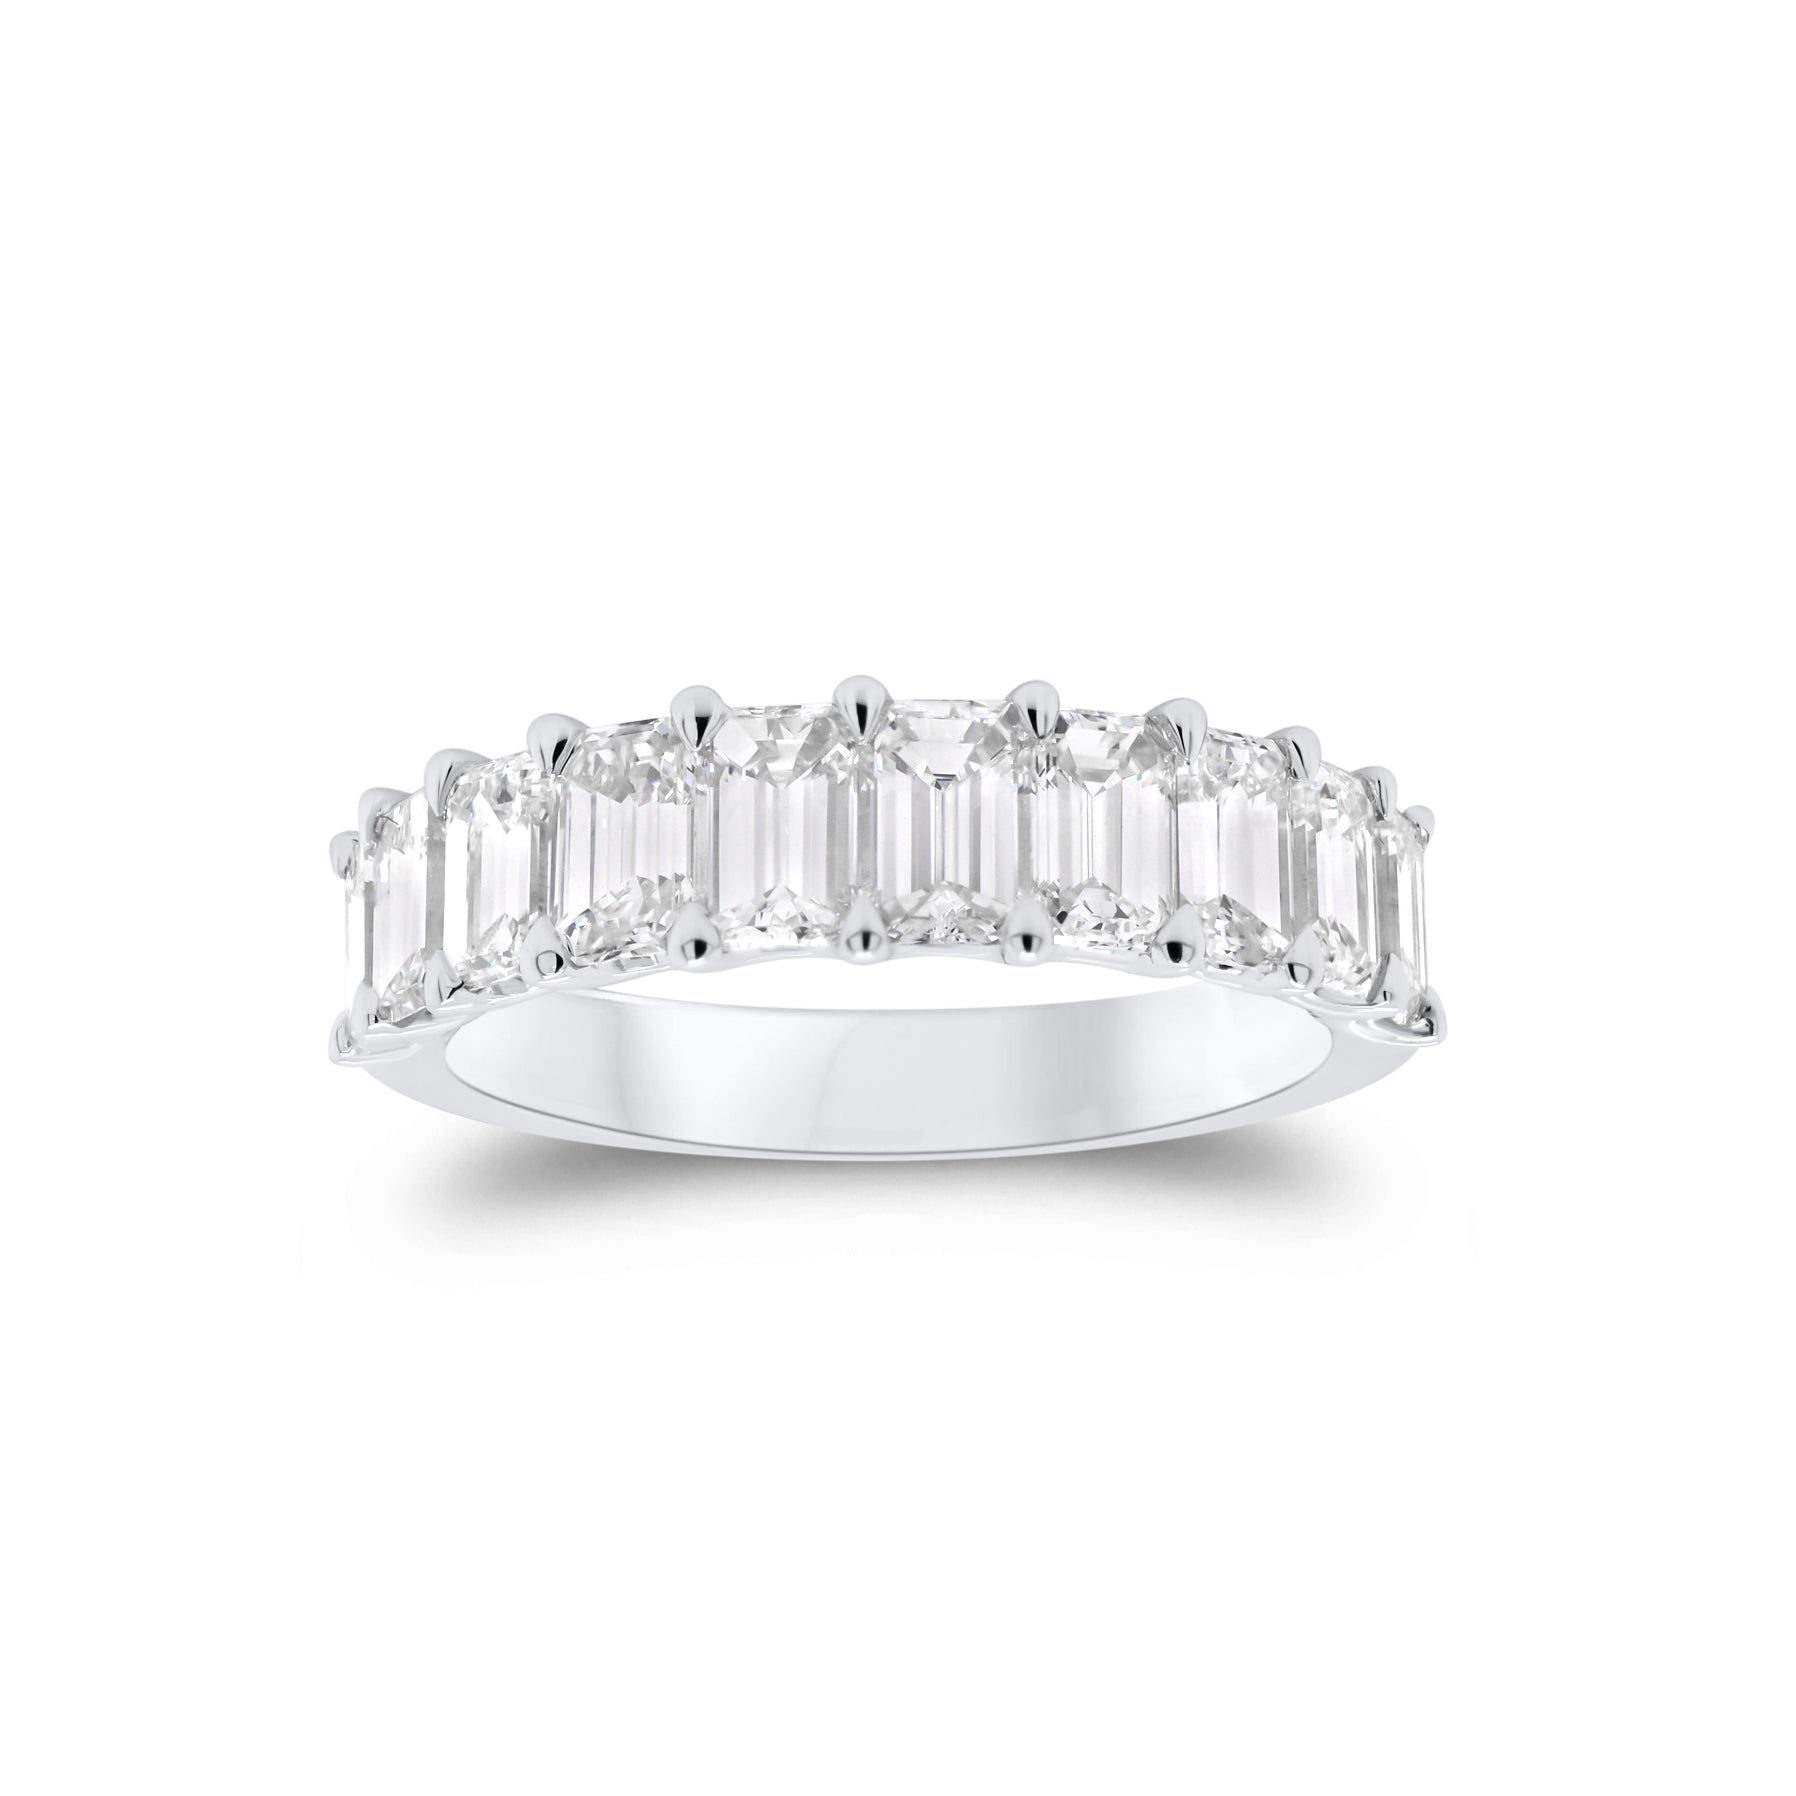 Emerald-Cut Diamond Wedding Band  - 18K gold weighing 4.09 grams  - 10 emerald-cut diamonds totaling 2.45 carats (GIA-graded F-G color, VS clarity)